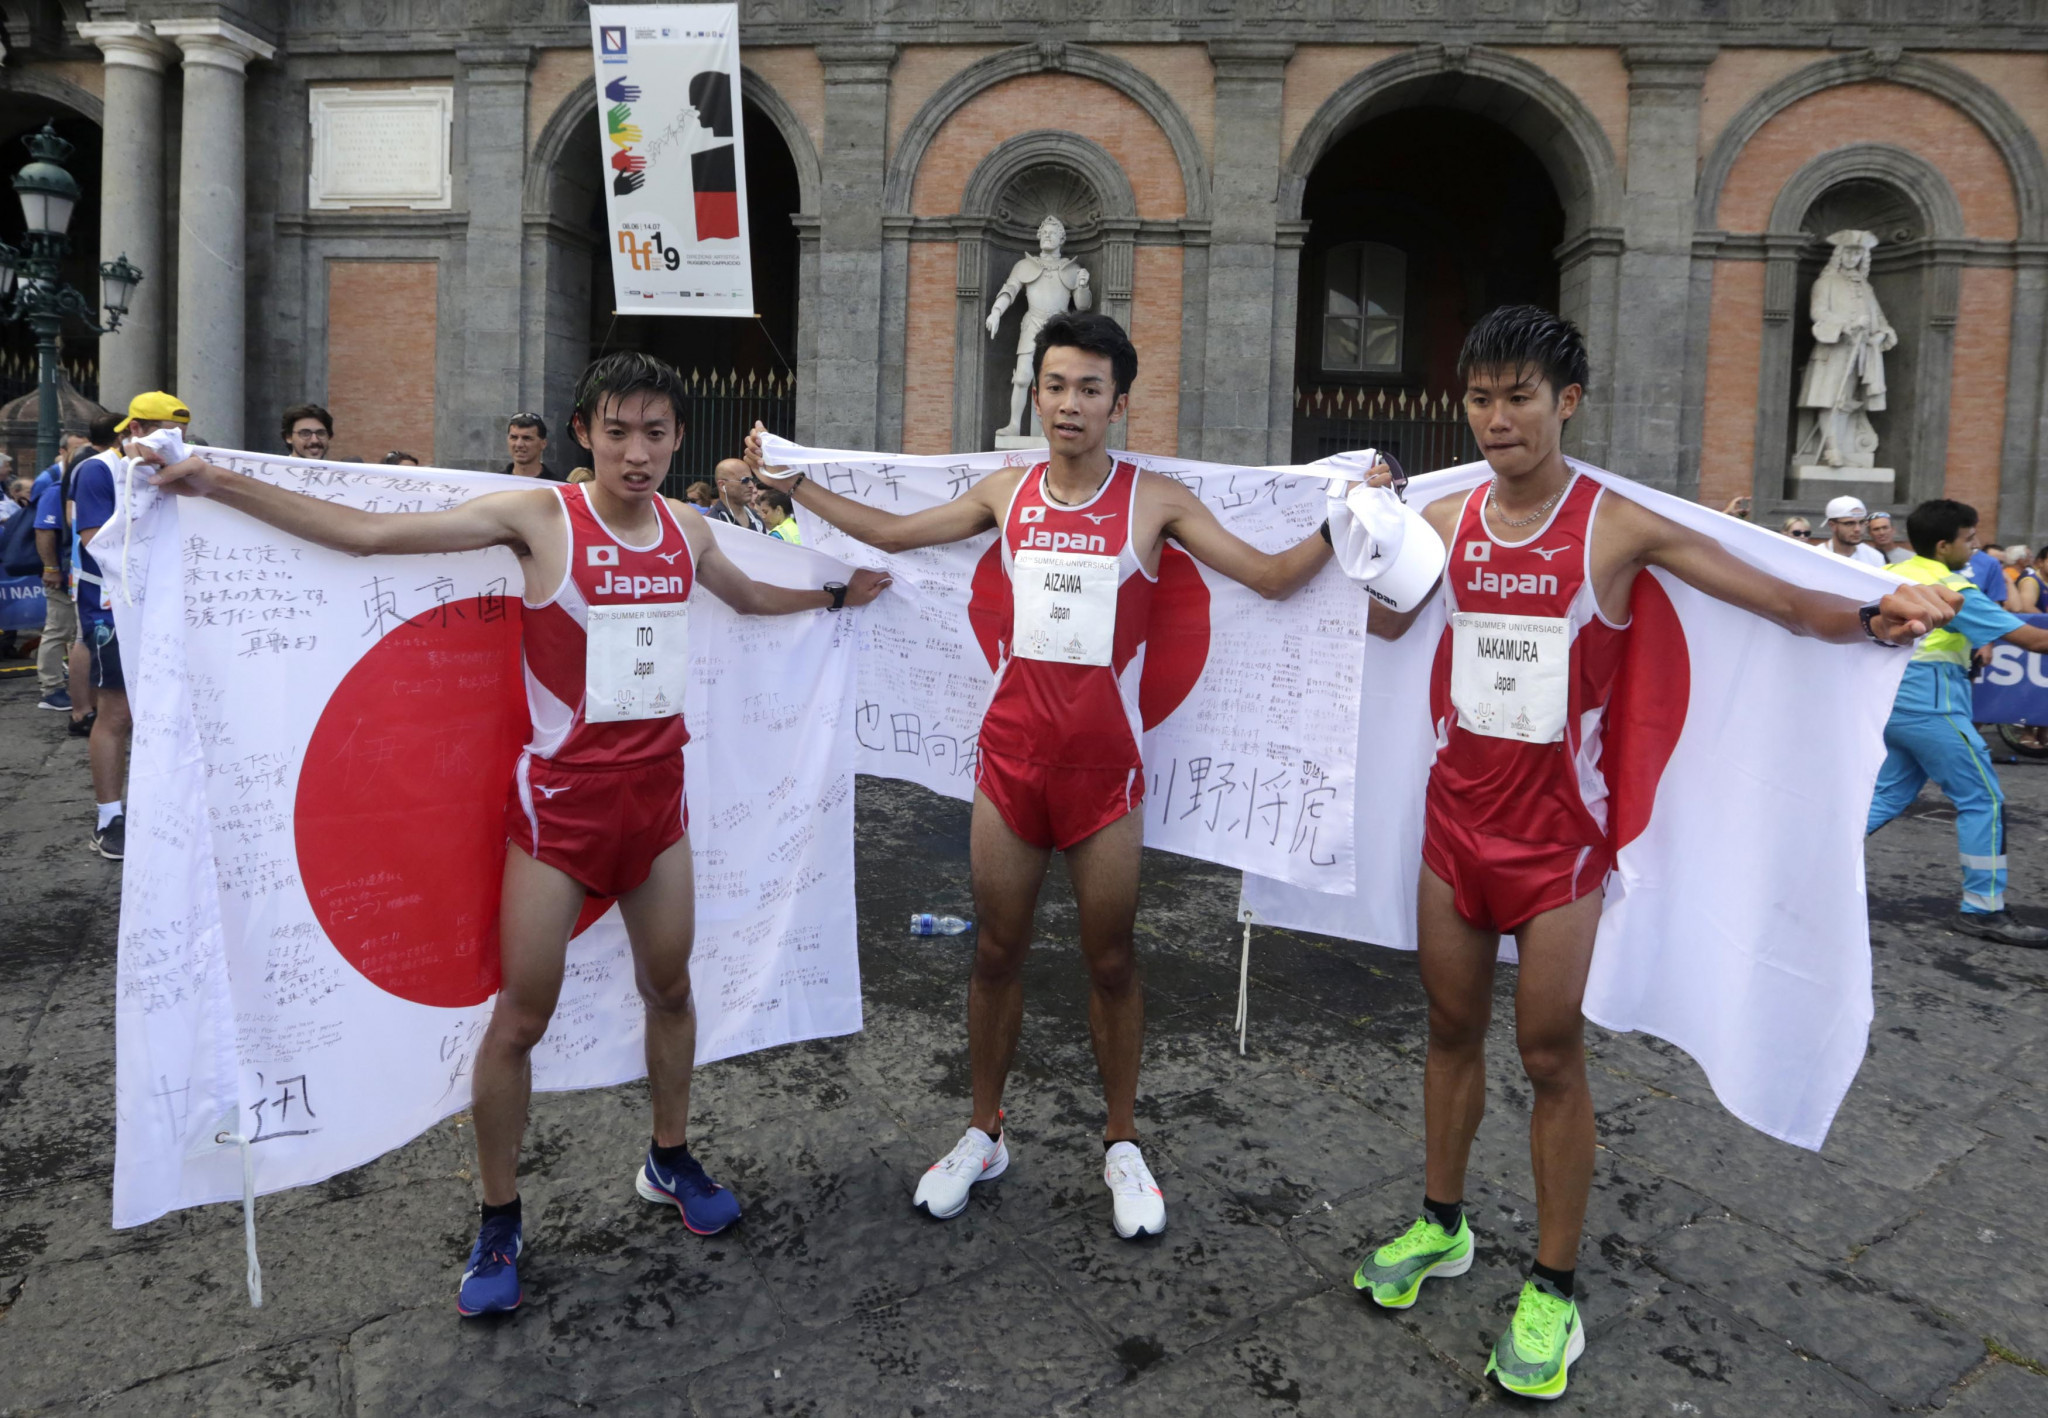 Japan take all three half marathon podium spots after Chinese disqualifications